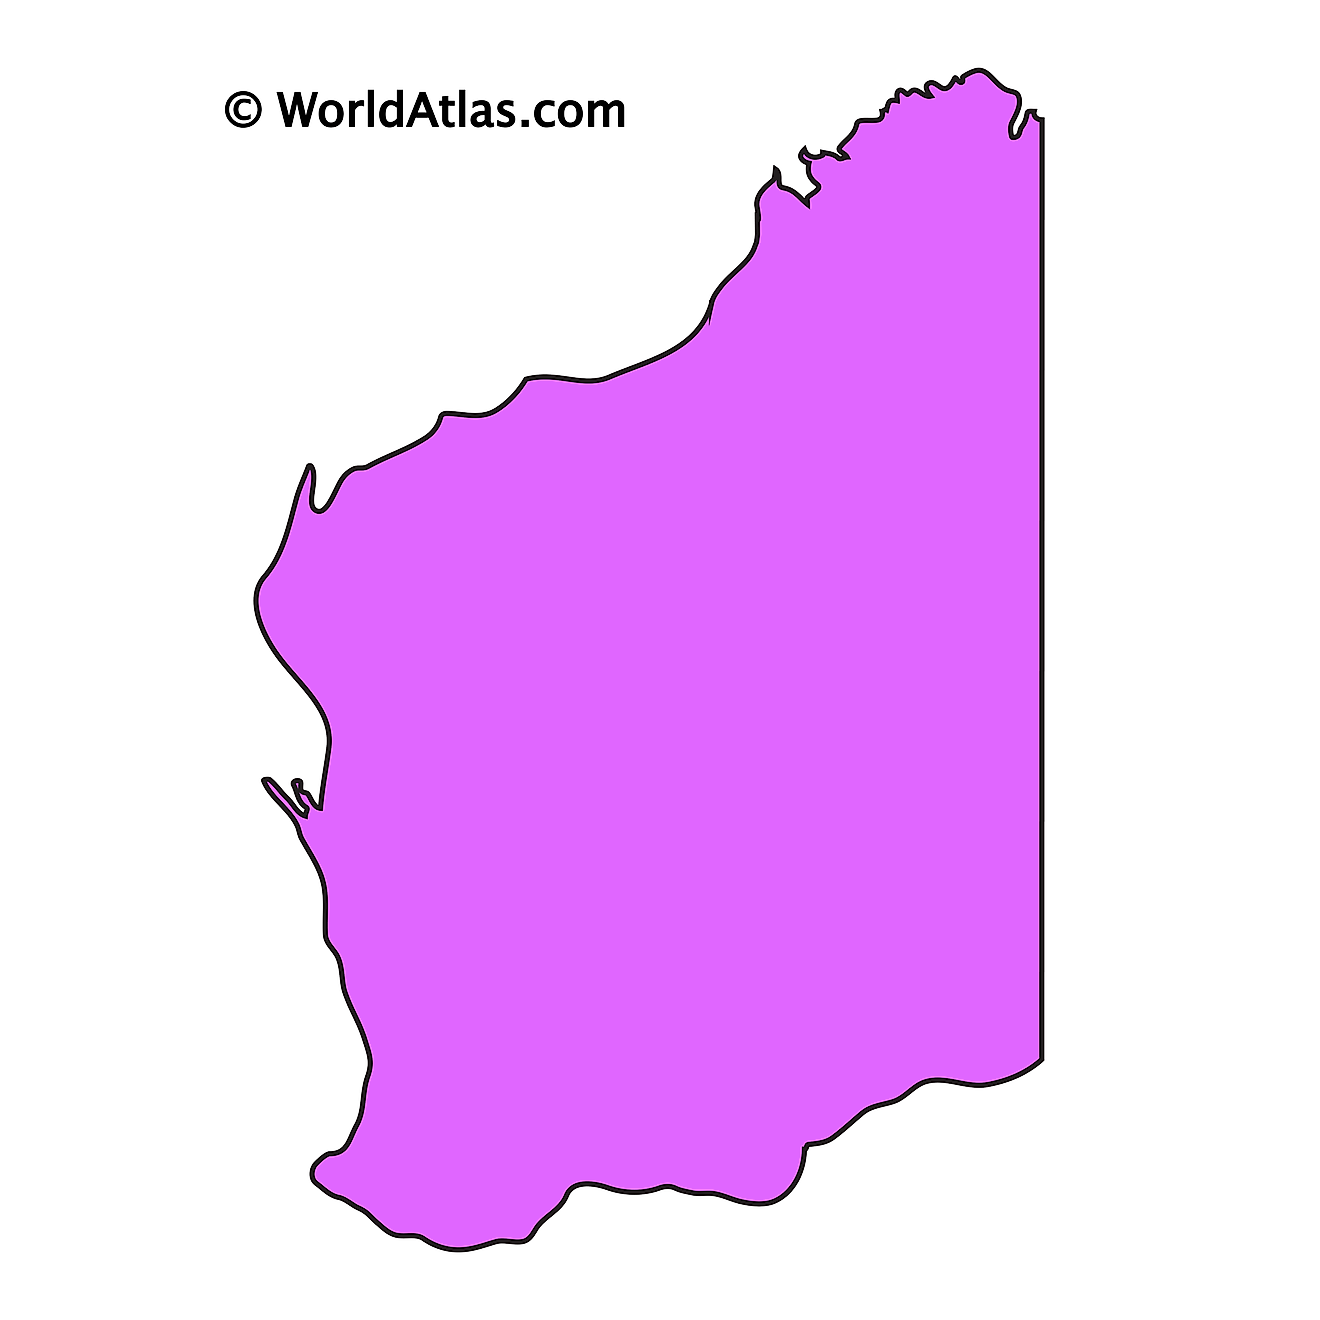 Outline Map of Western Australia